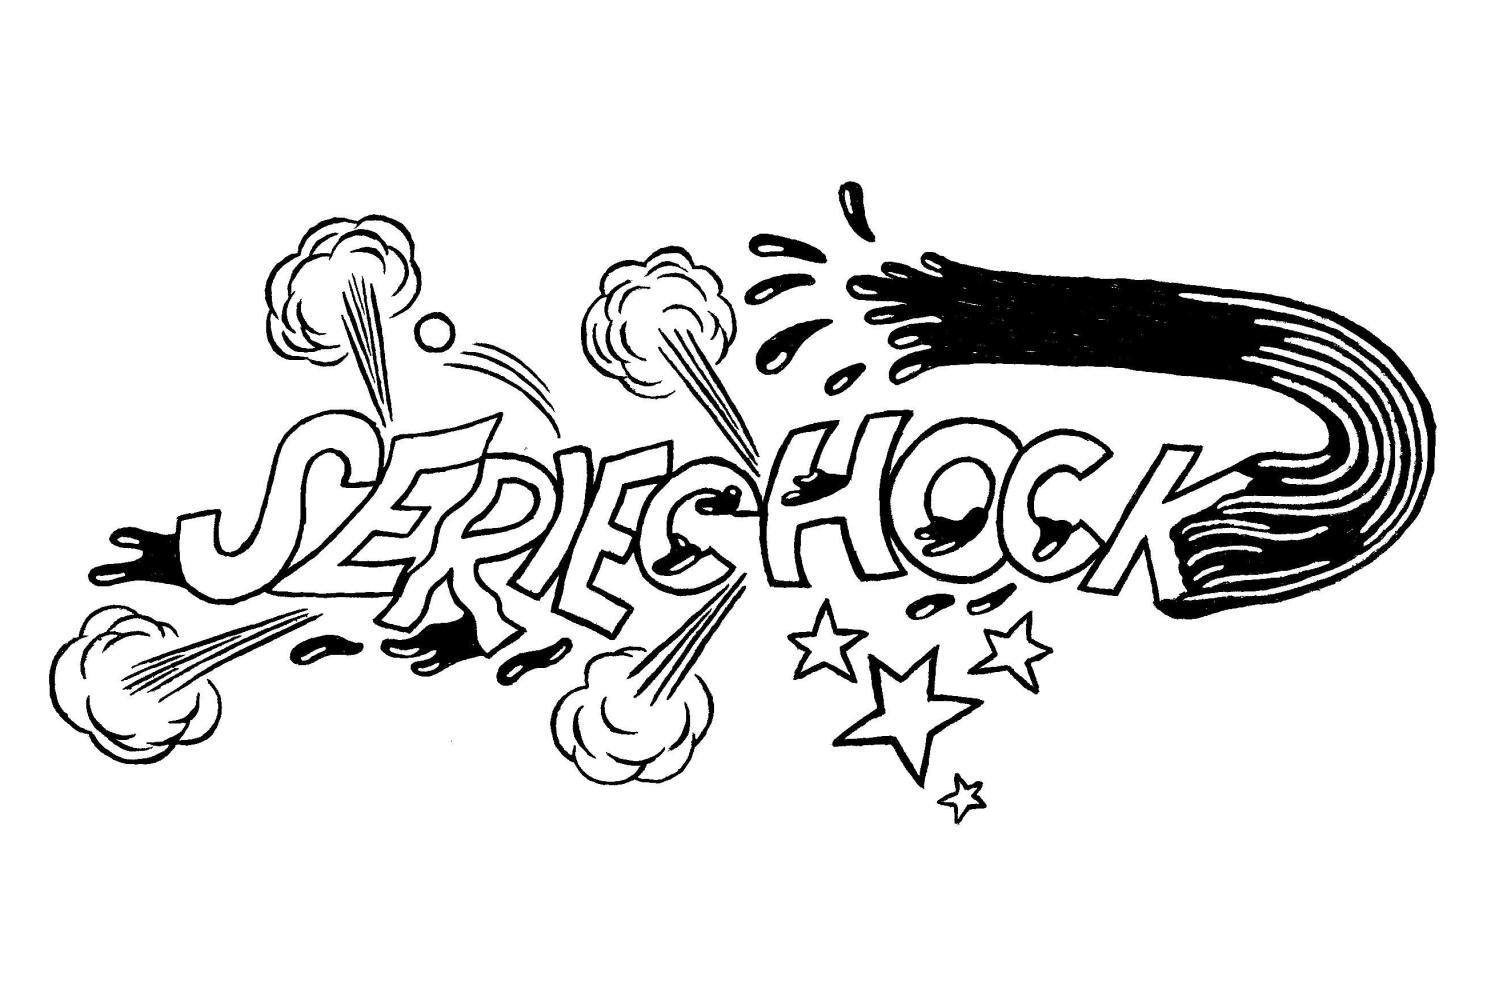 SERIECHOCK – fem samtida serietecknare 